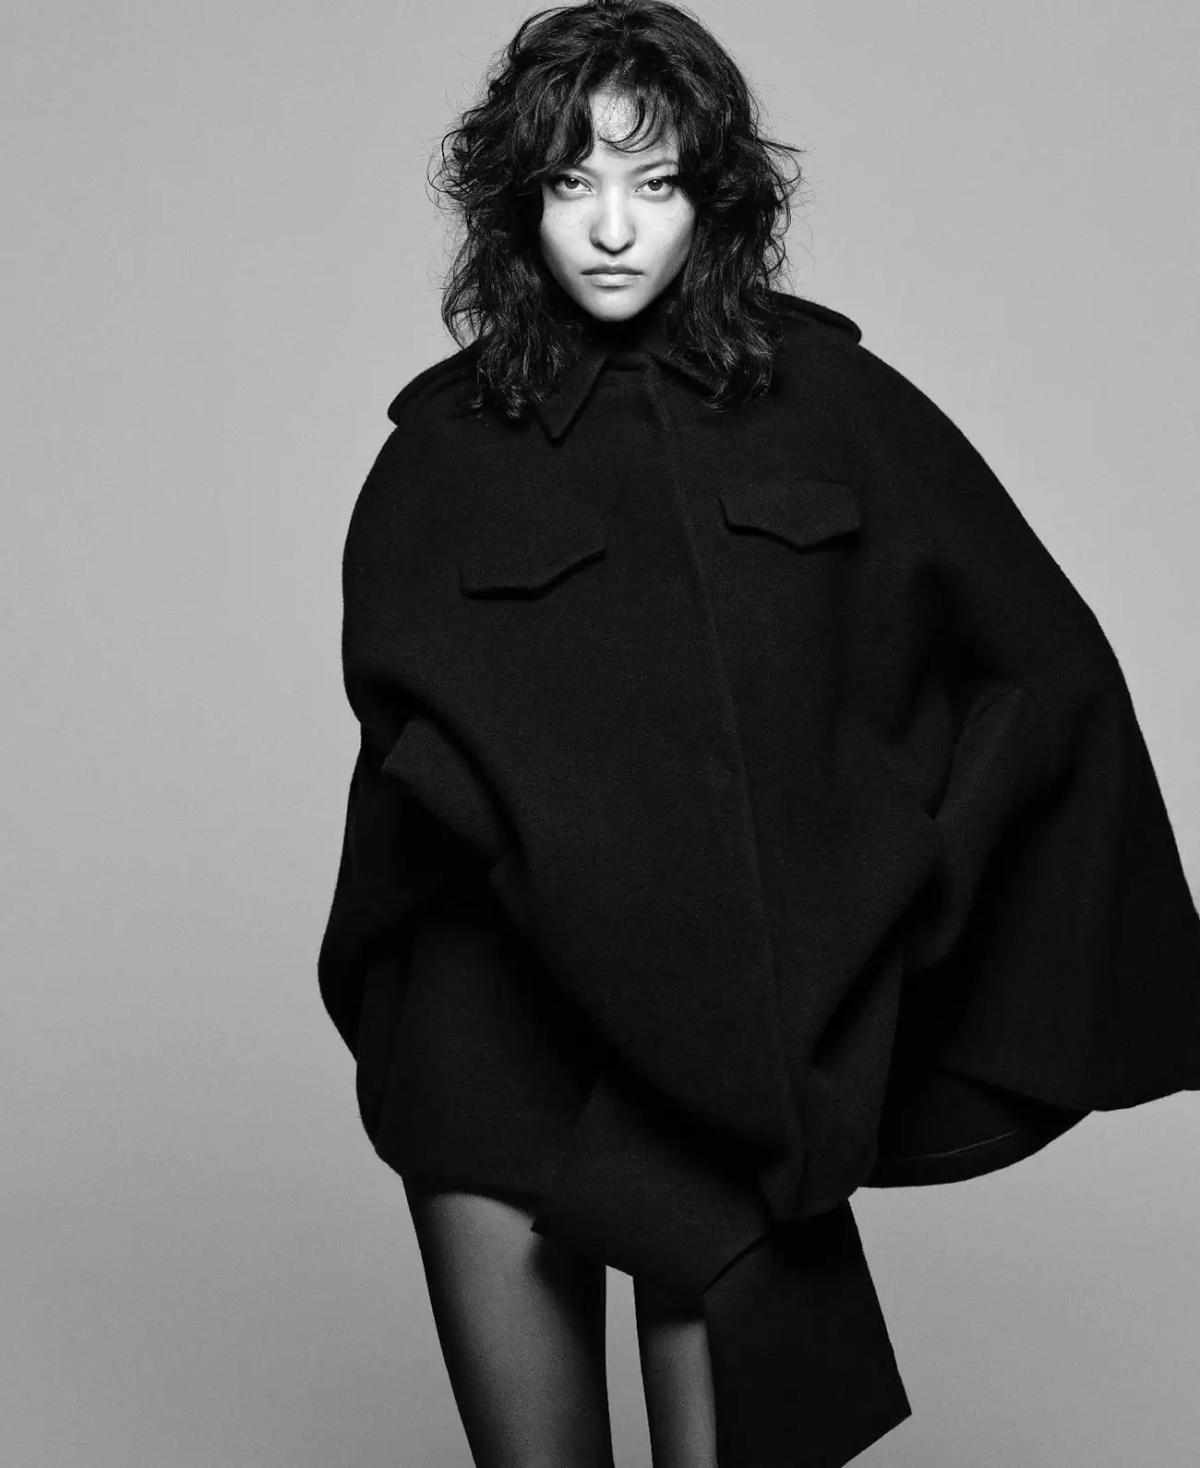 Prada Black single-breasted Wool Jacket and Prada Black asymmetric-hem Mini Skirt Minimal Fashion Editorials